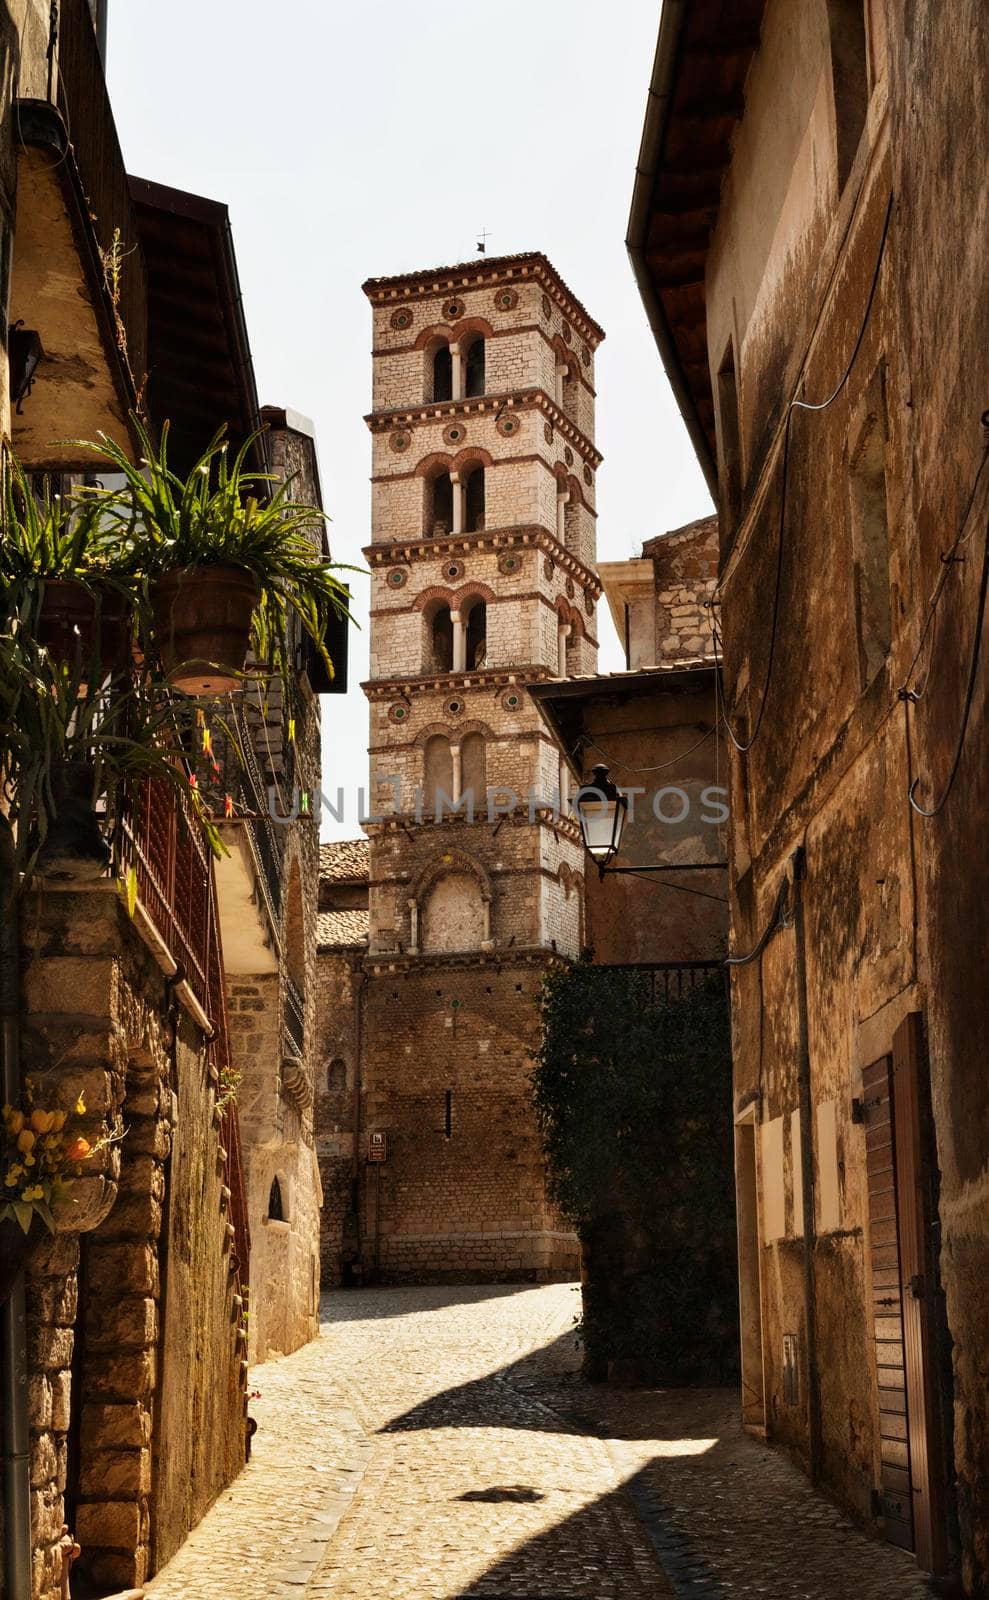 Church bell tower in Sermoneta , Italy by victimewalker